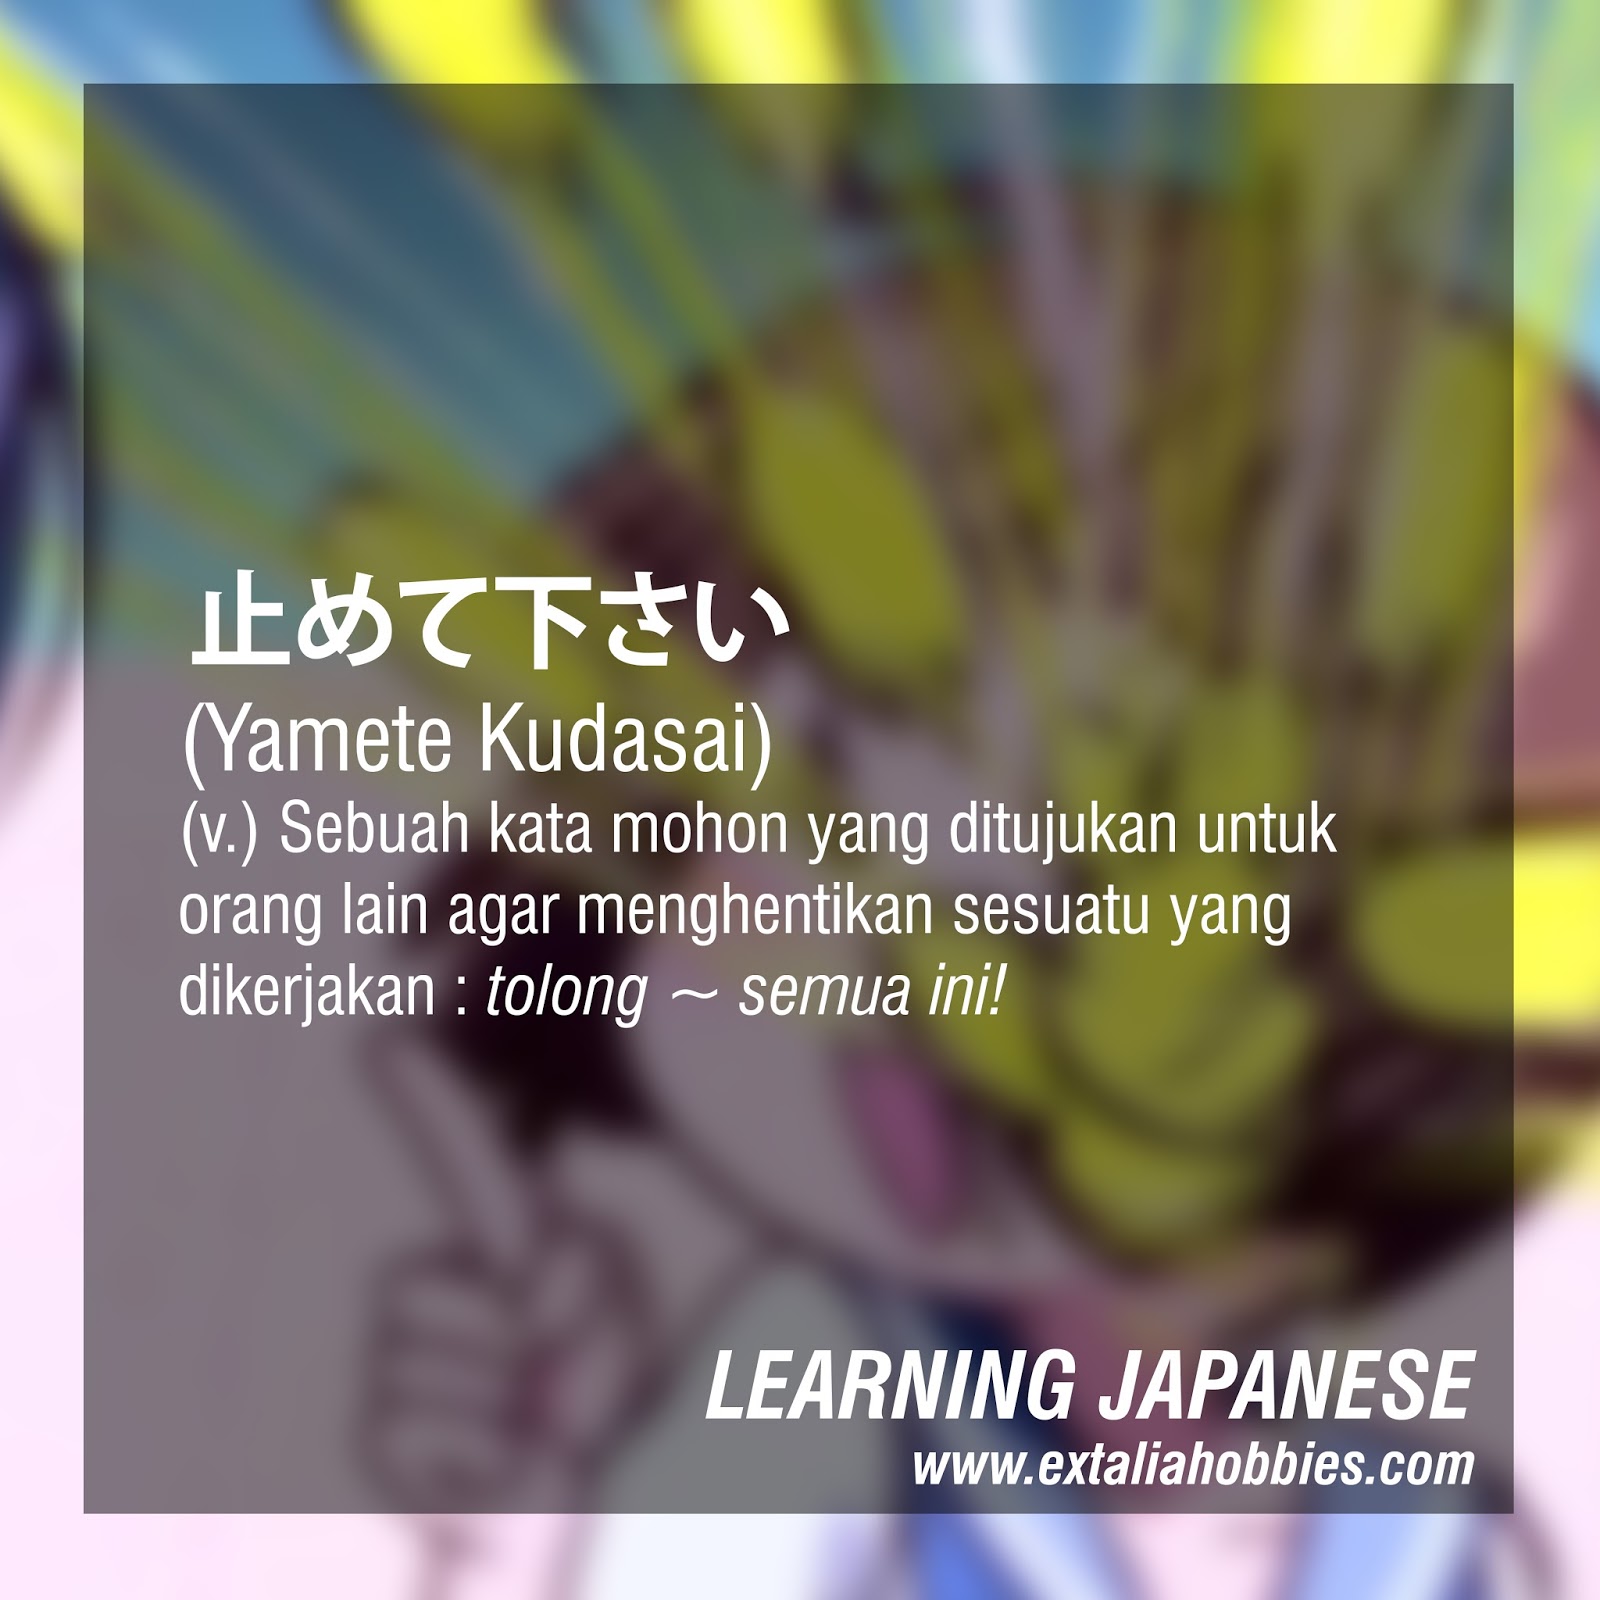 LearningJapanese